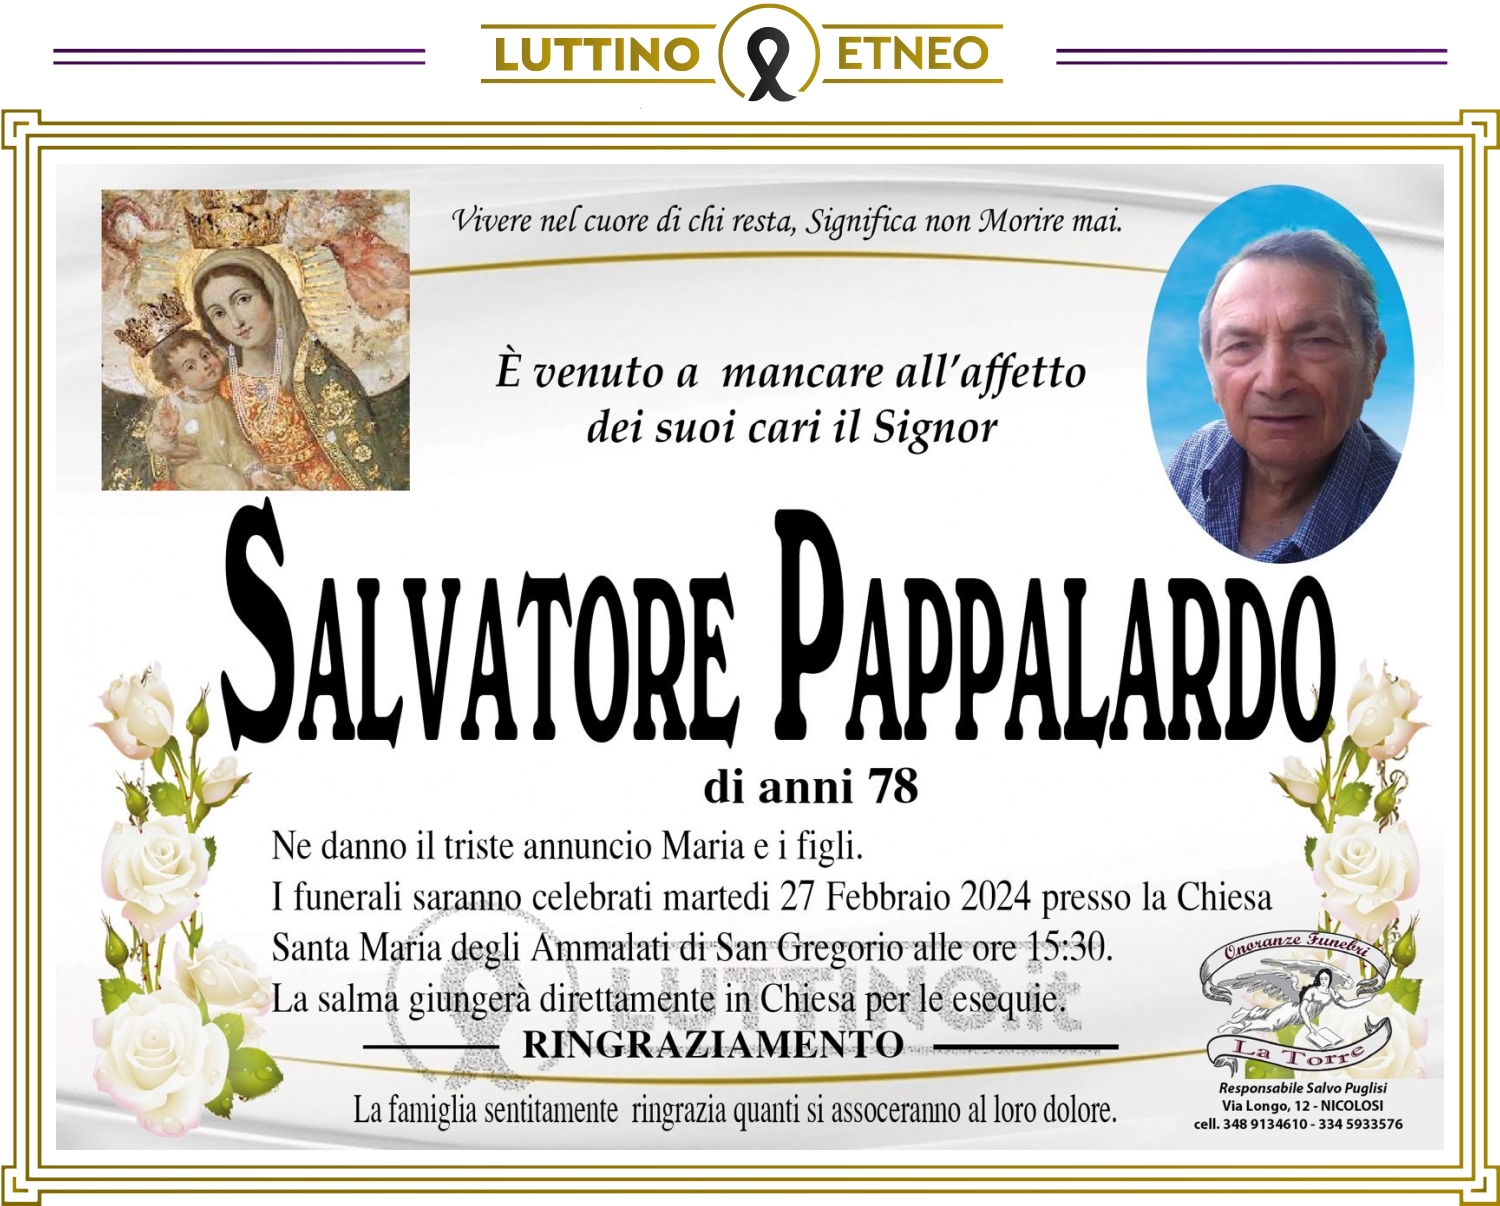 Salvatore Pappalardo